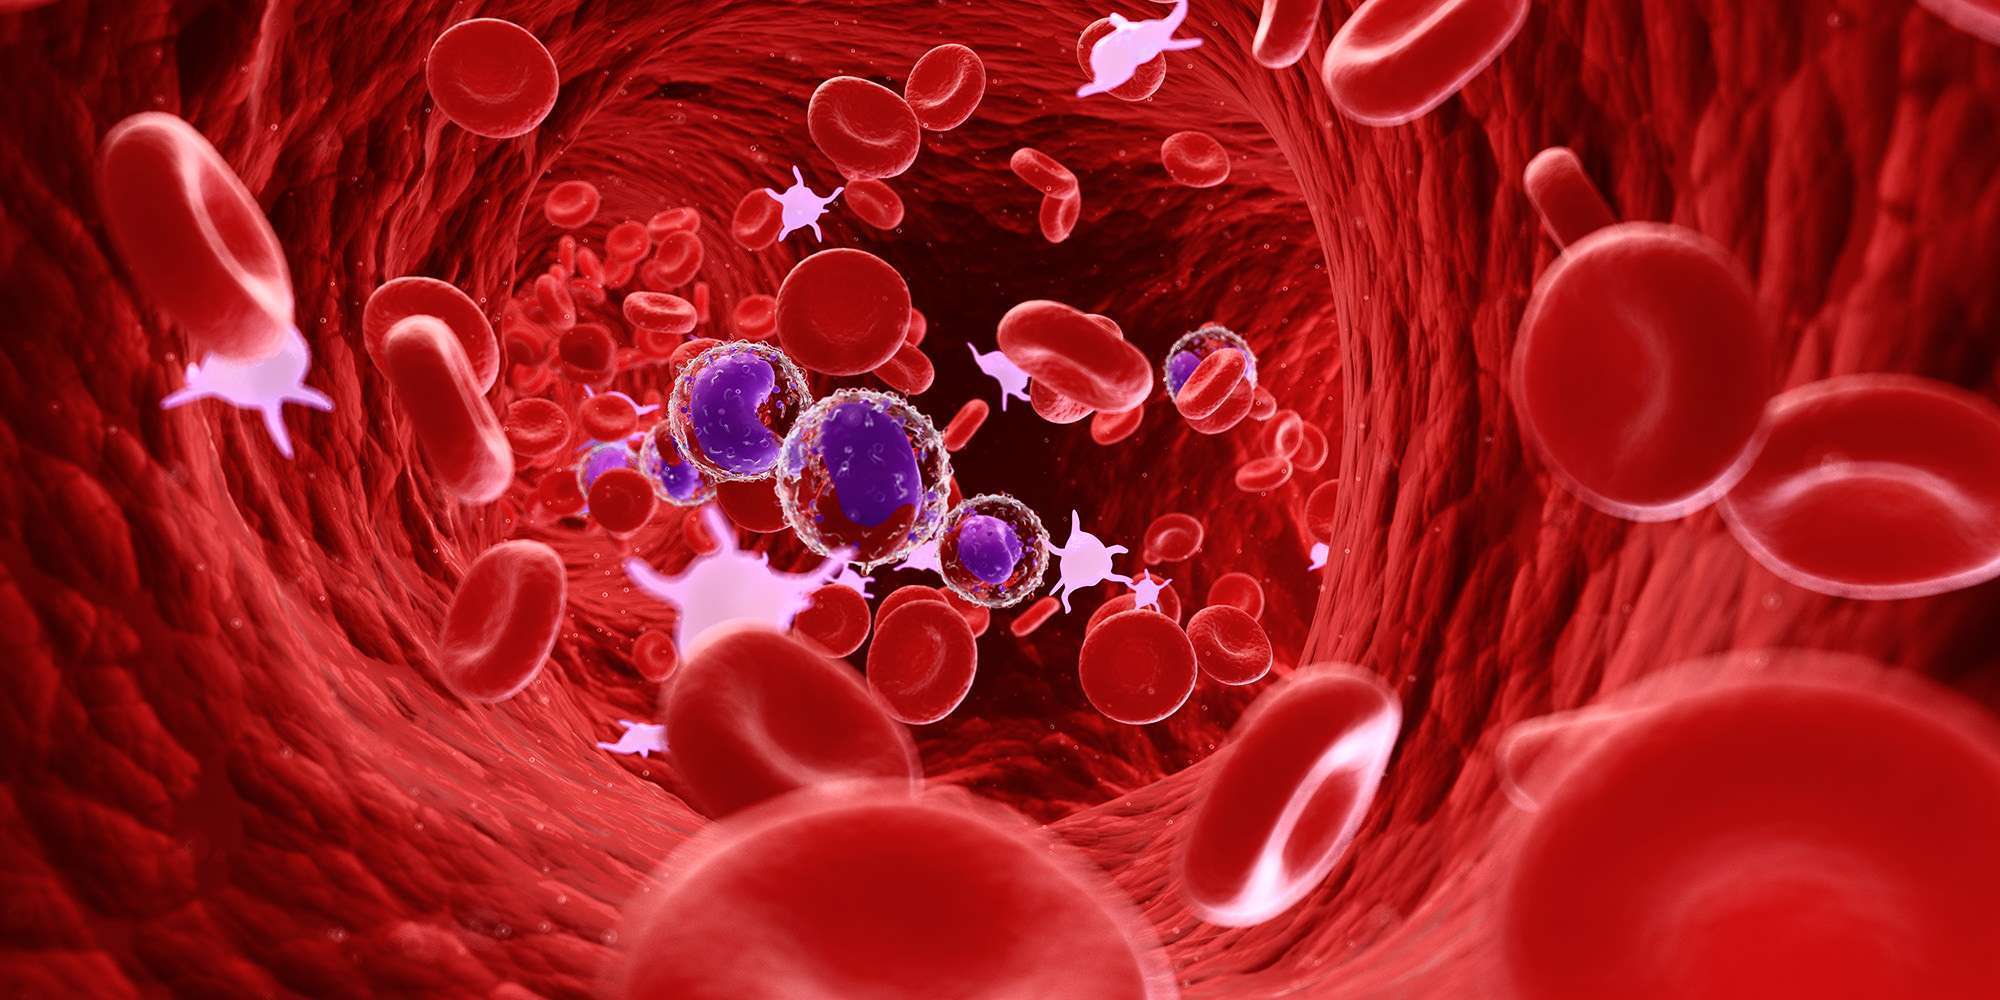 Human blood cells